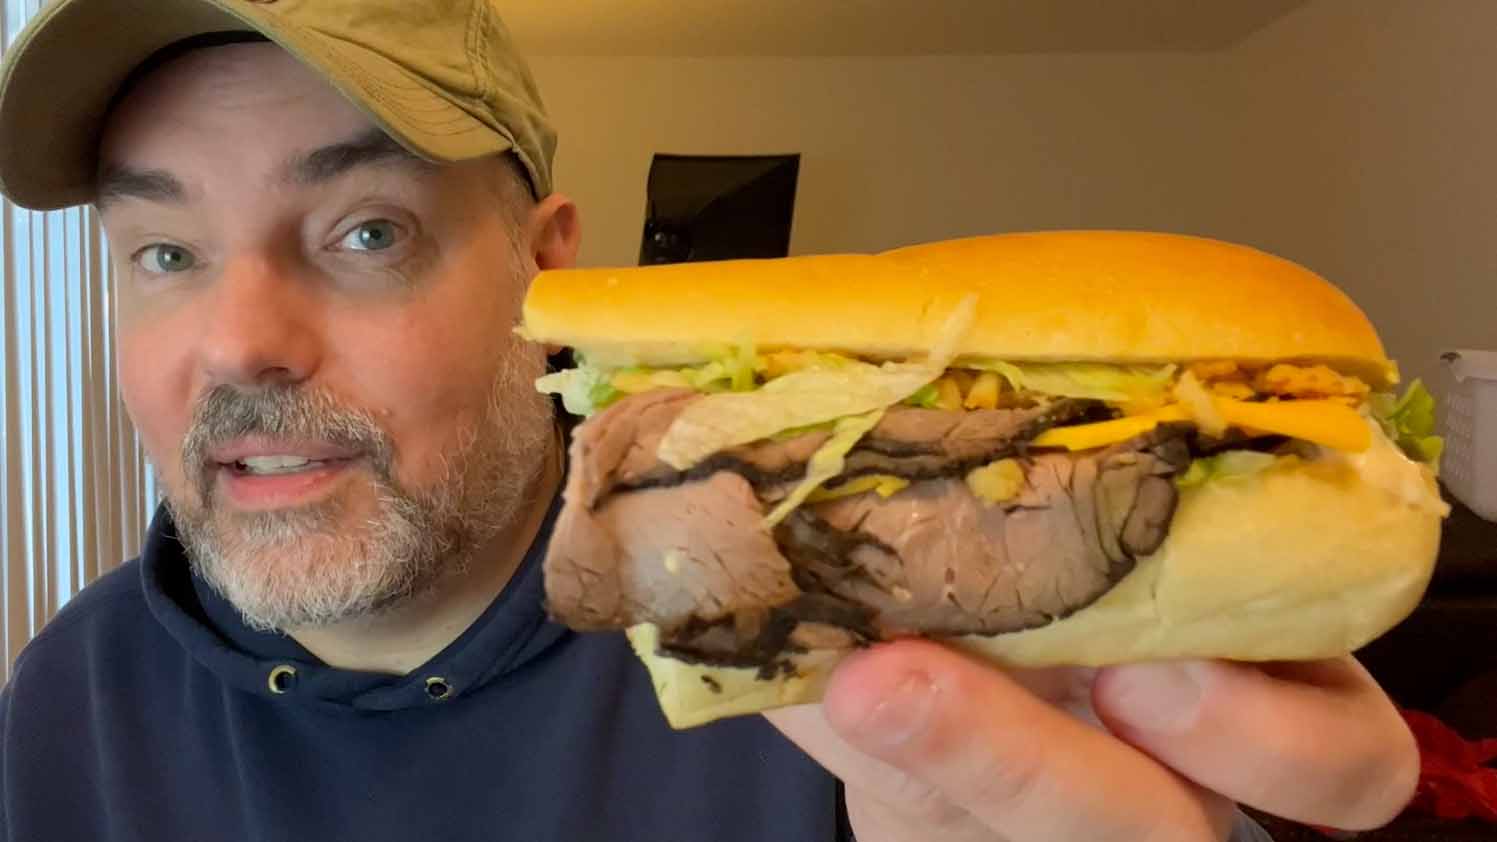 Matt Calkins with the All-American Beefy Crunch sandwich from Jimmy John's